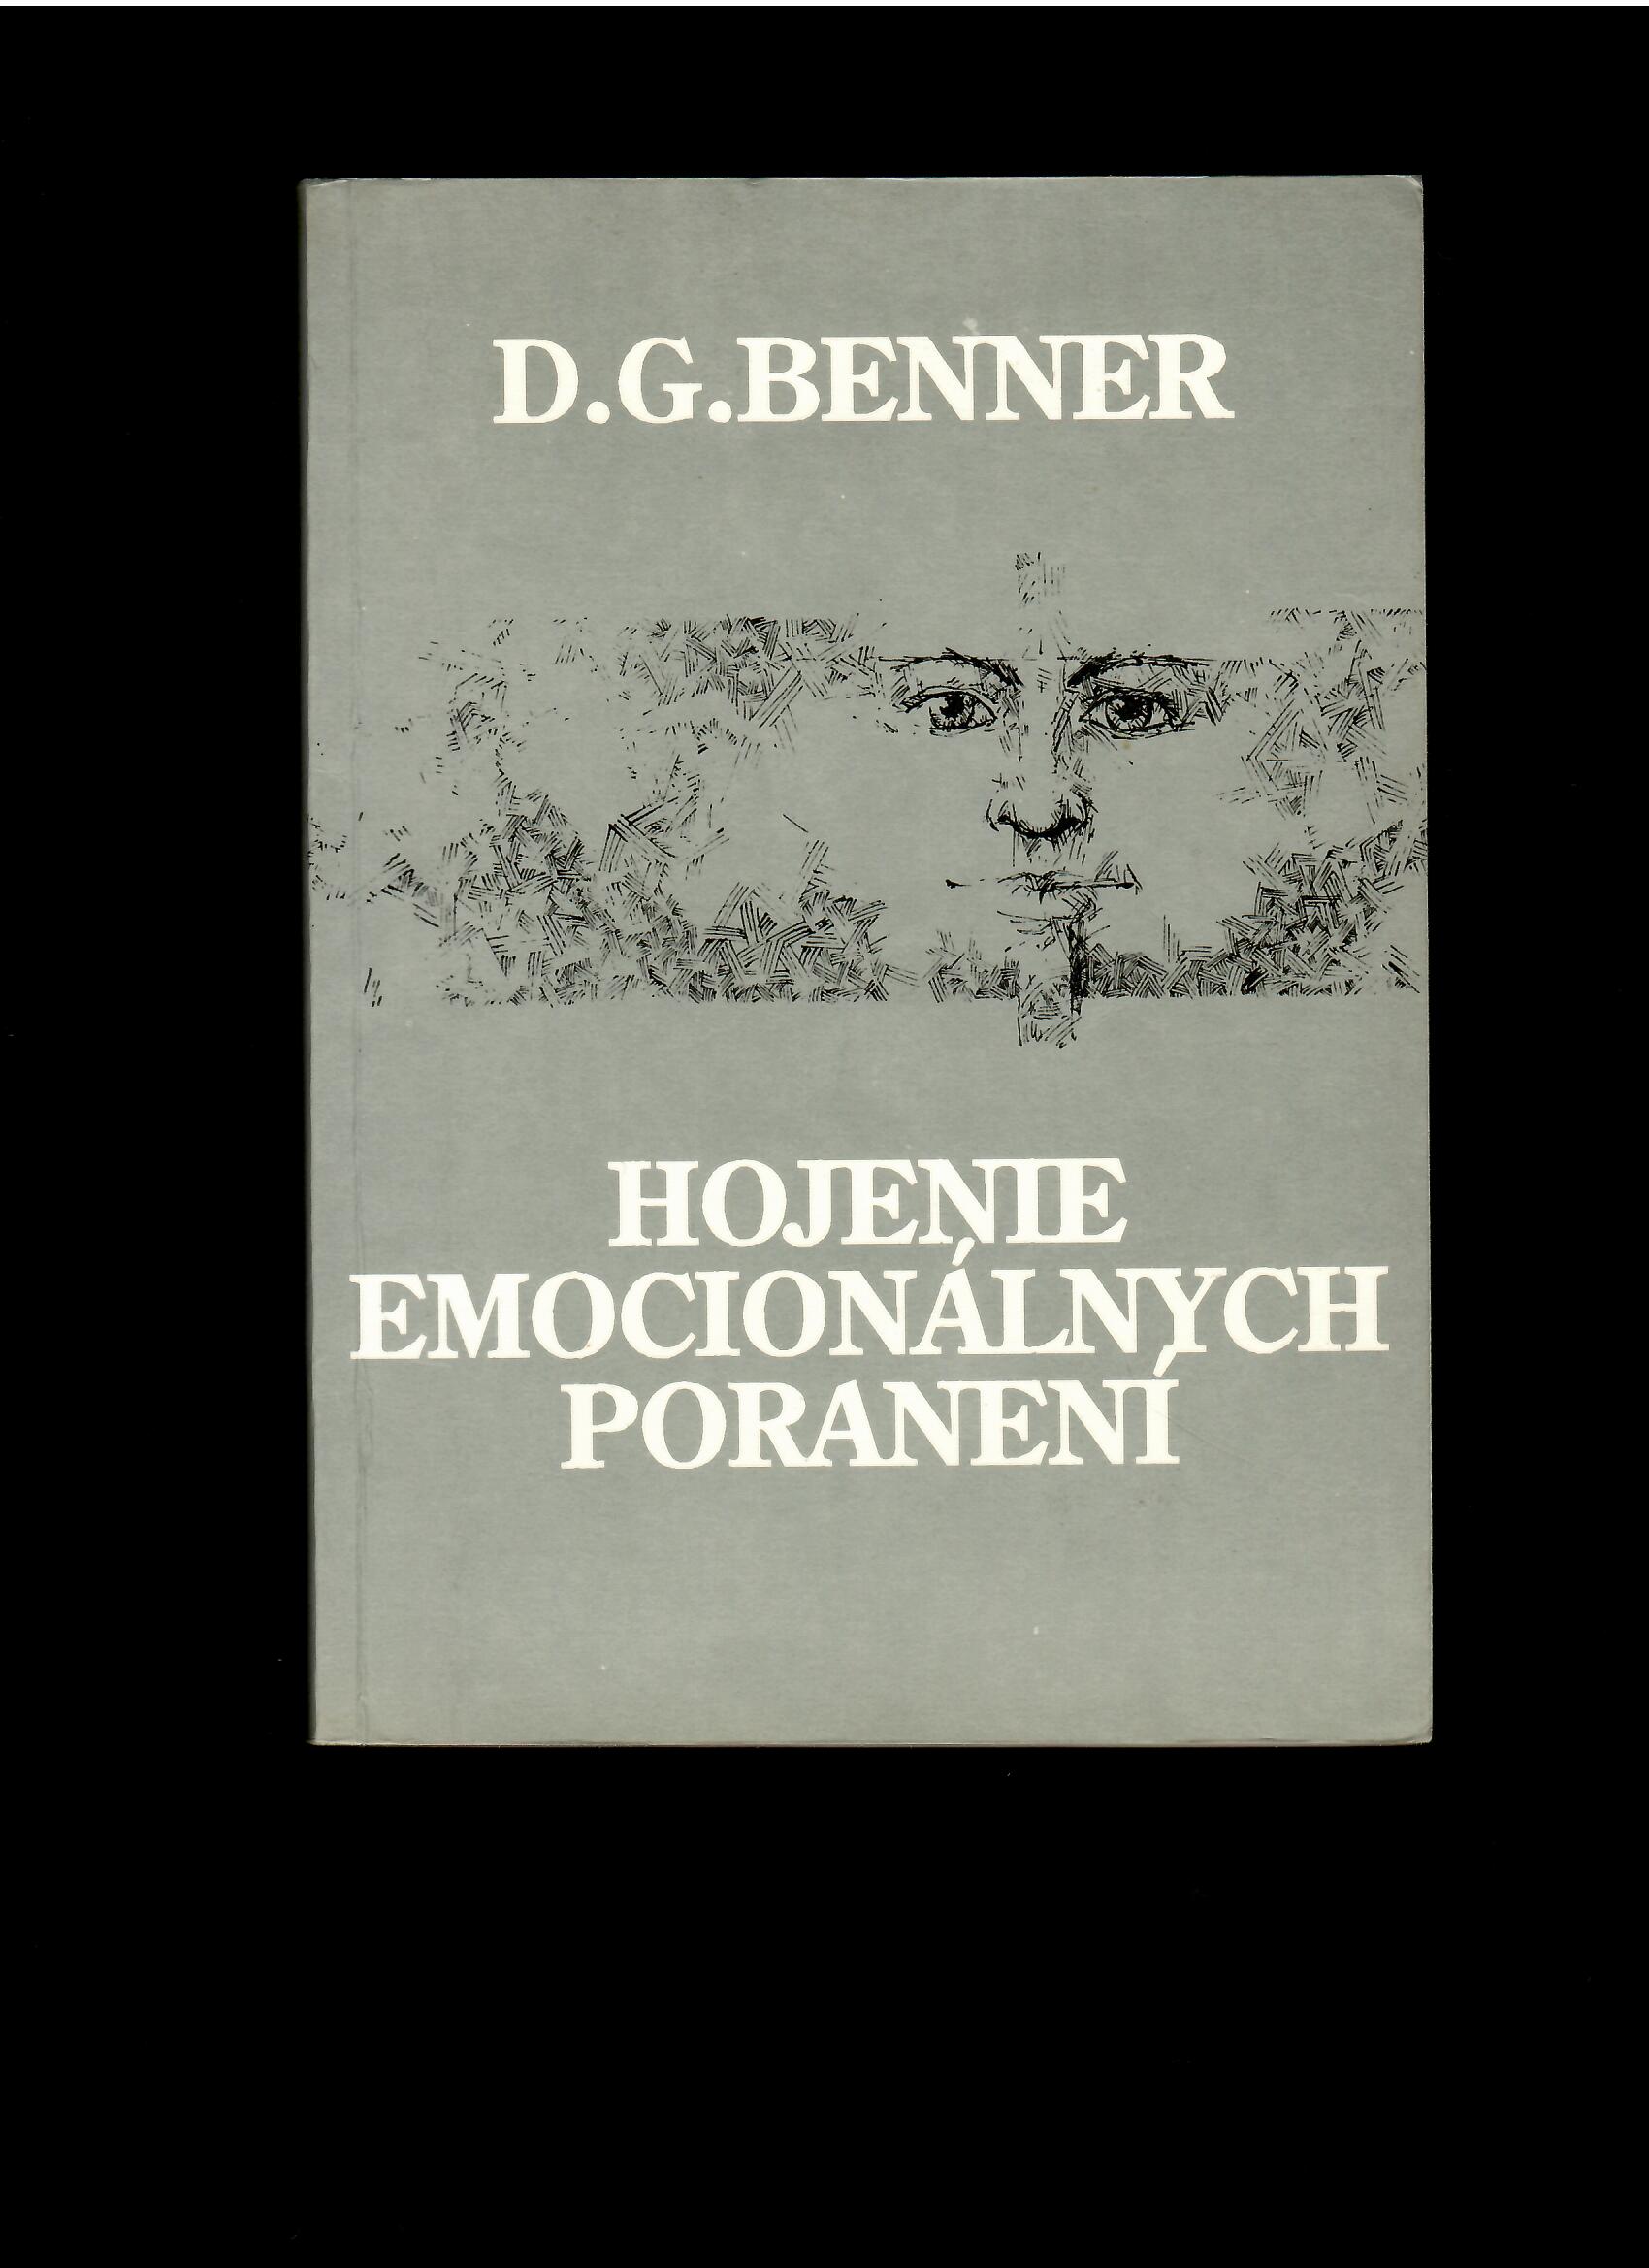 D. G. Benner: Hojenie emocionálnych poranení